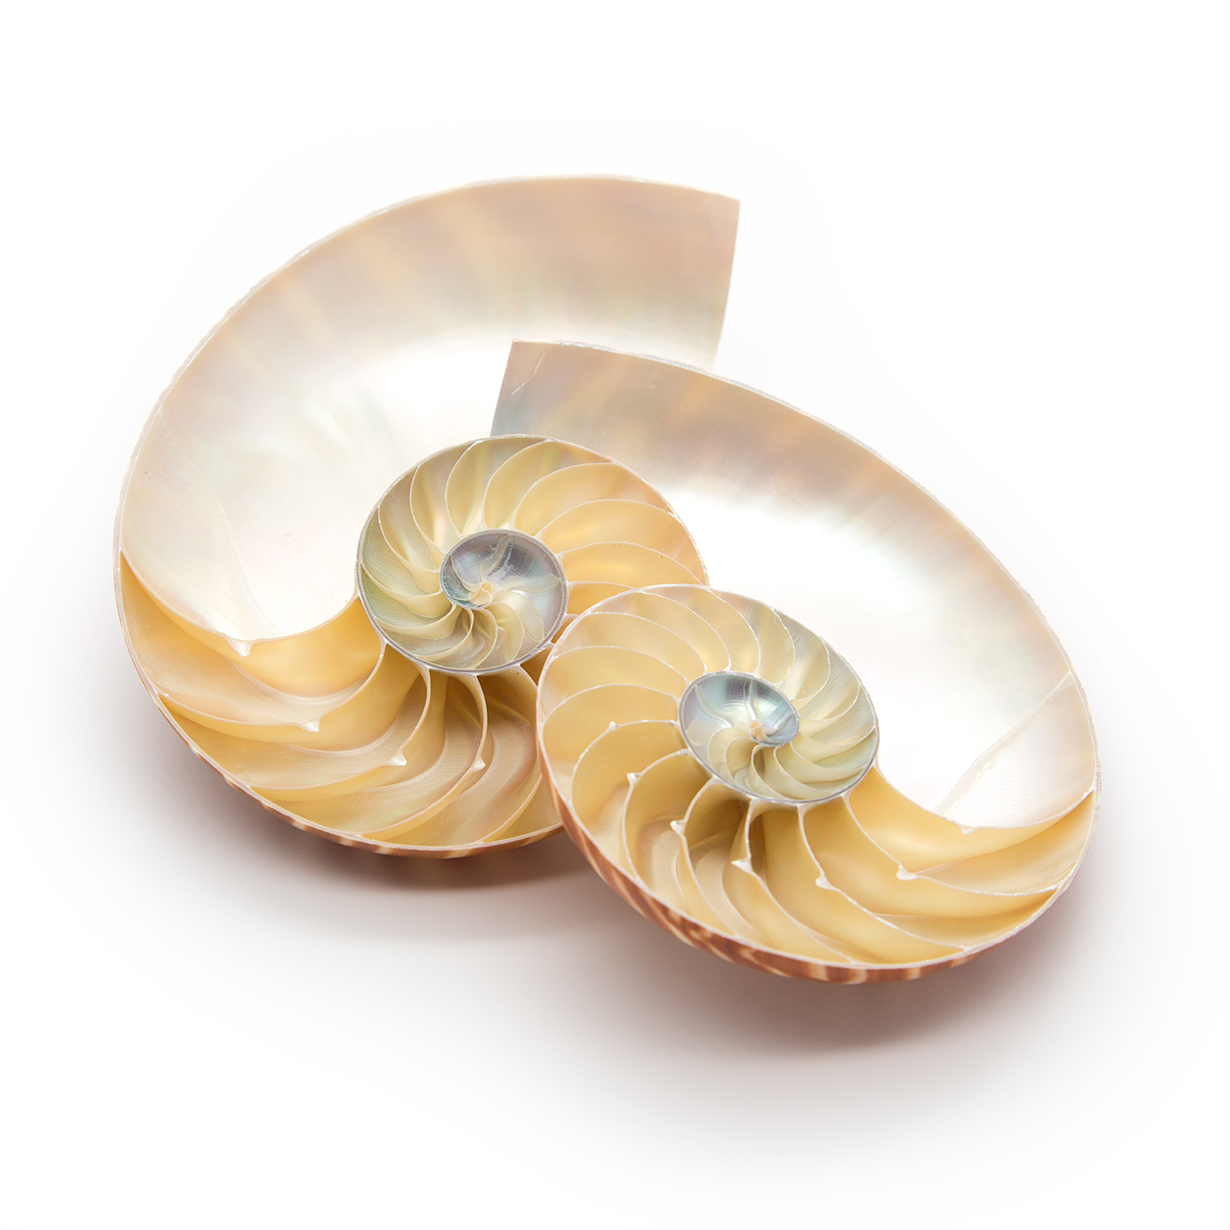 Center Cut Nautilus Shells